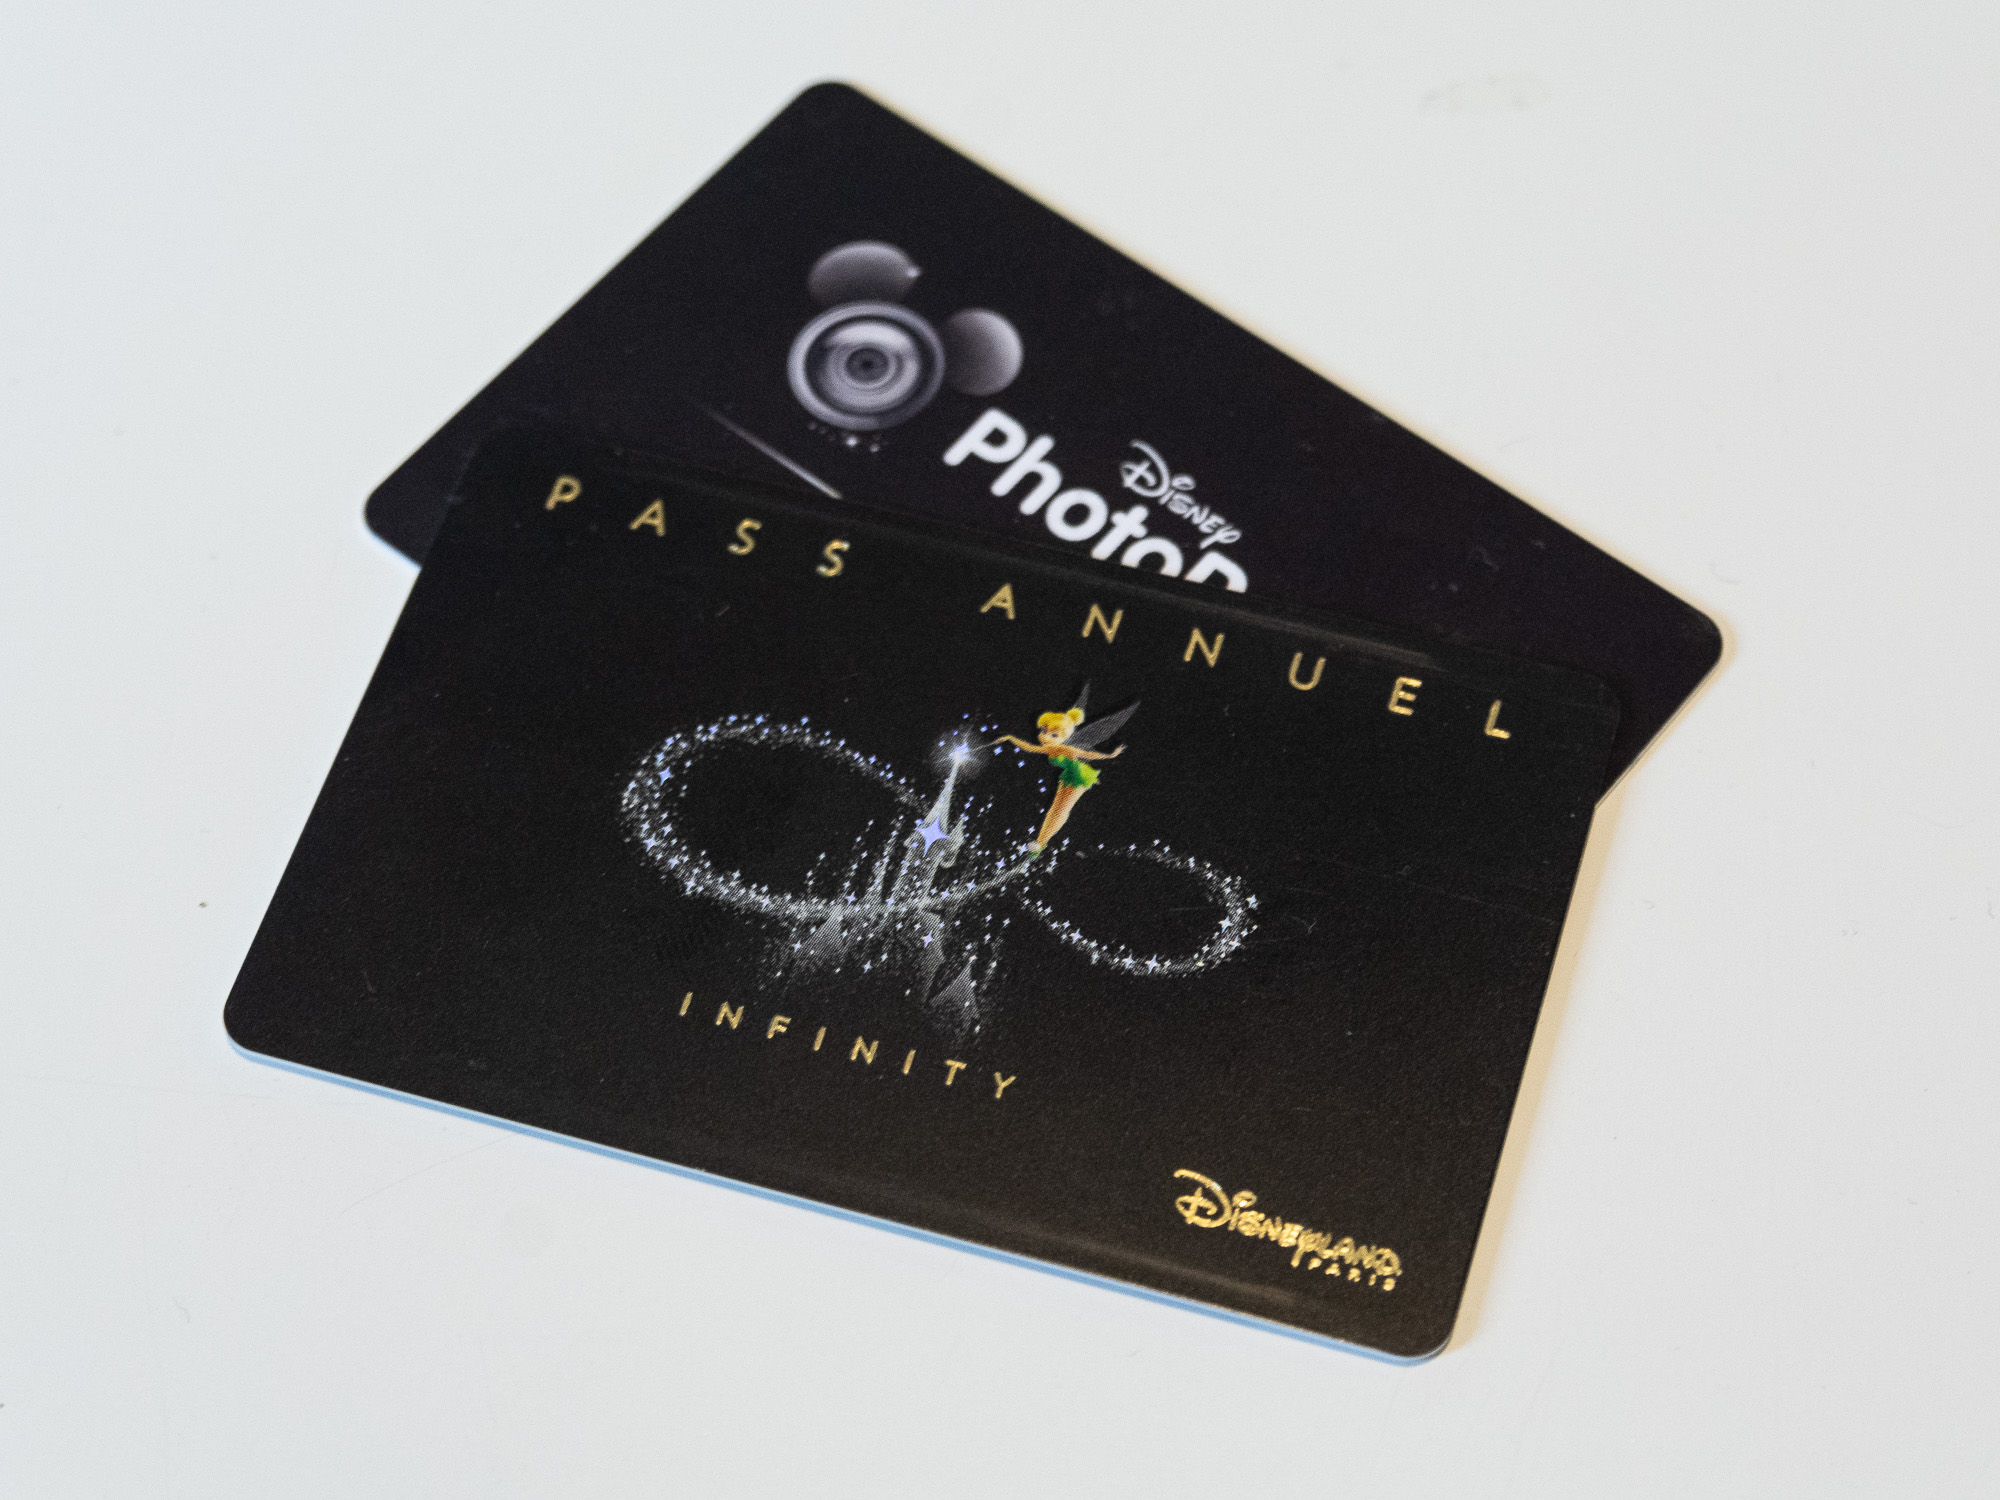 Disneyland Paris Infinity Pass with a Disney Photopass+ behind it